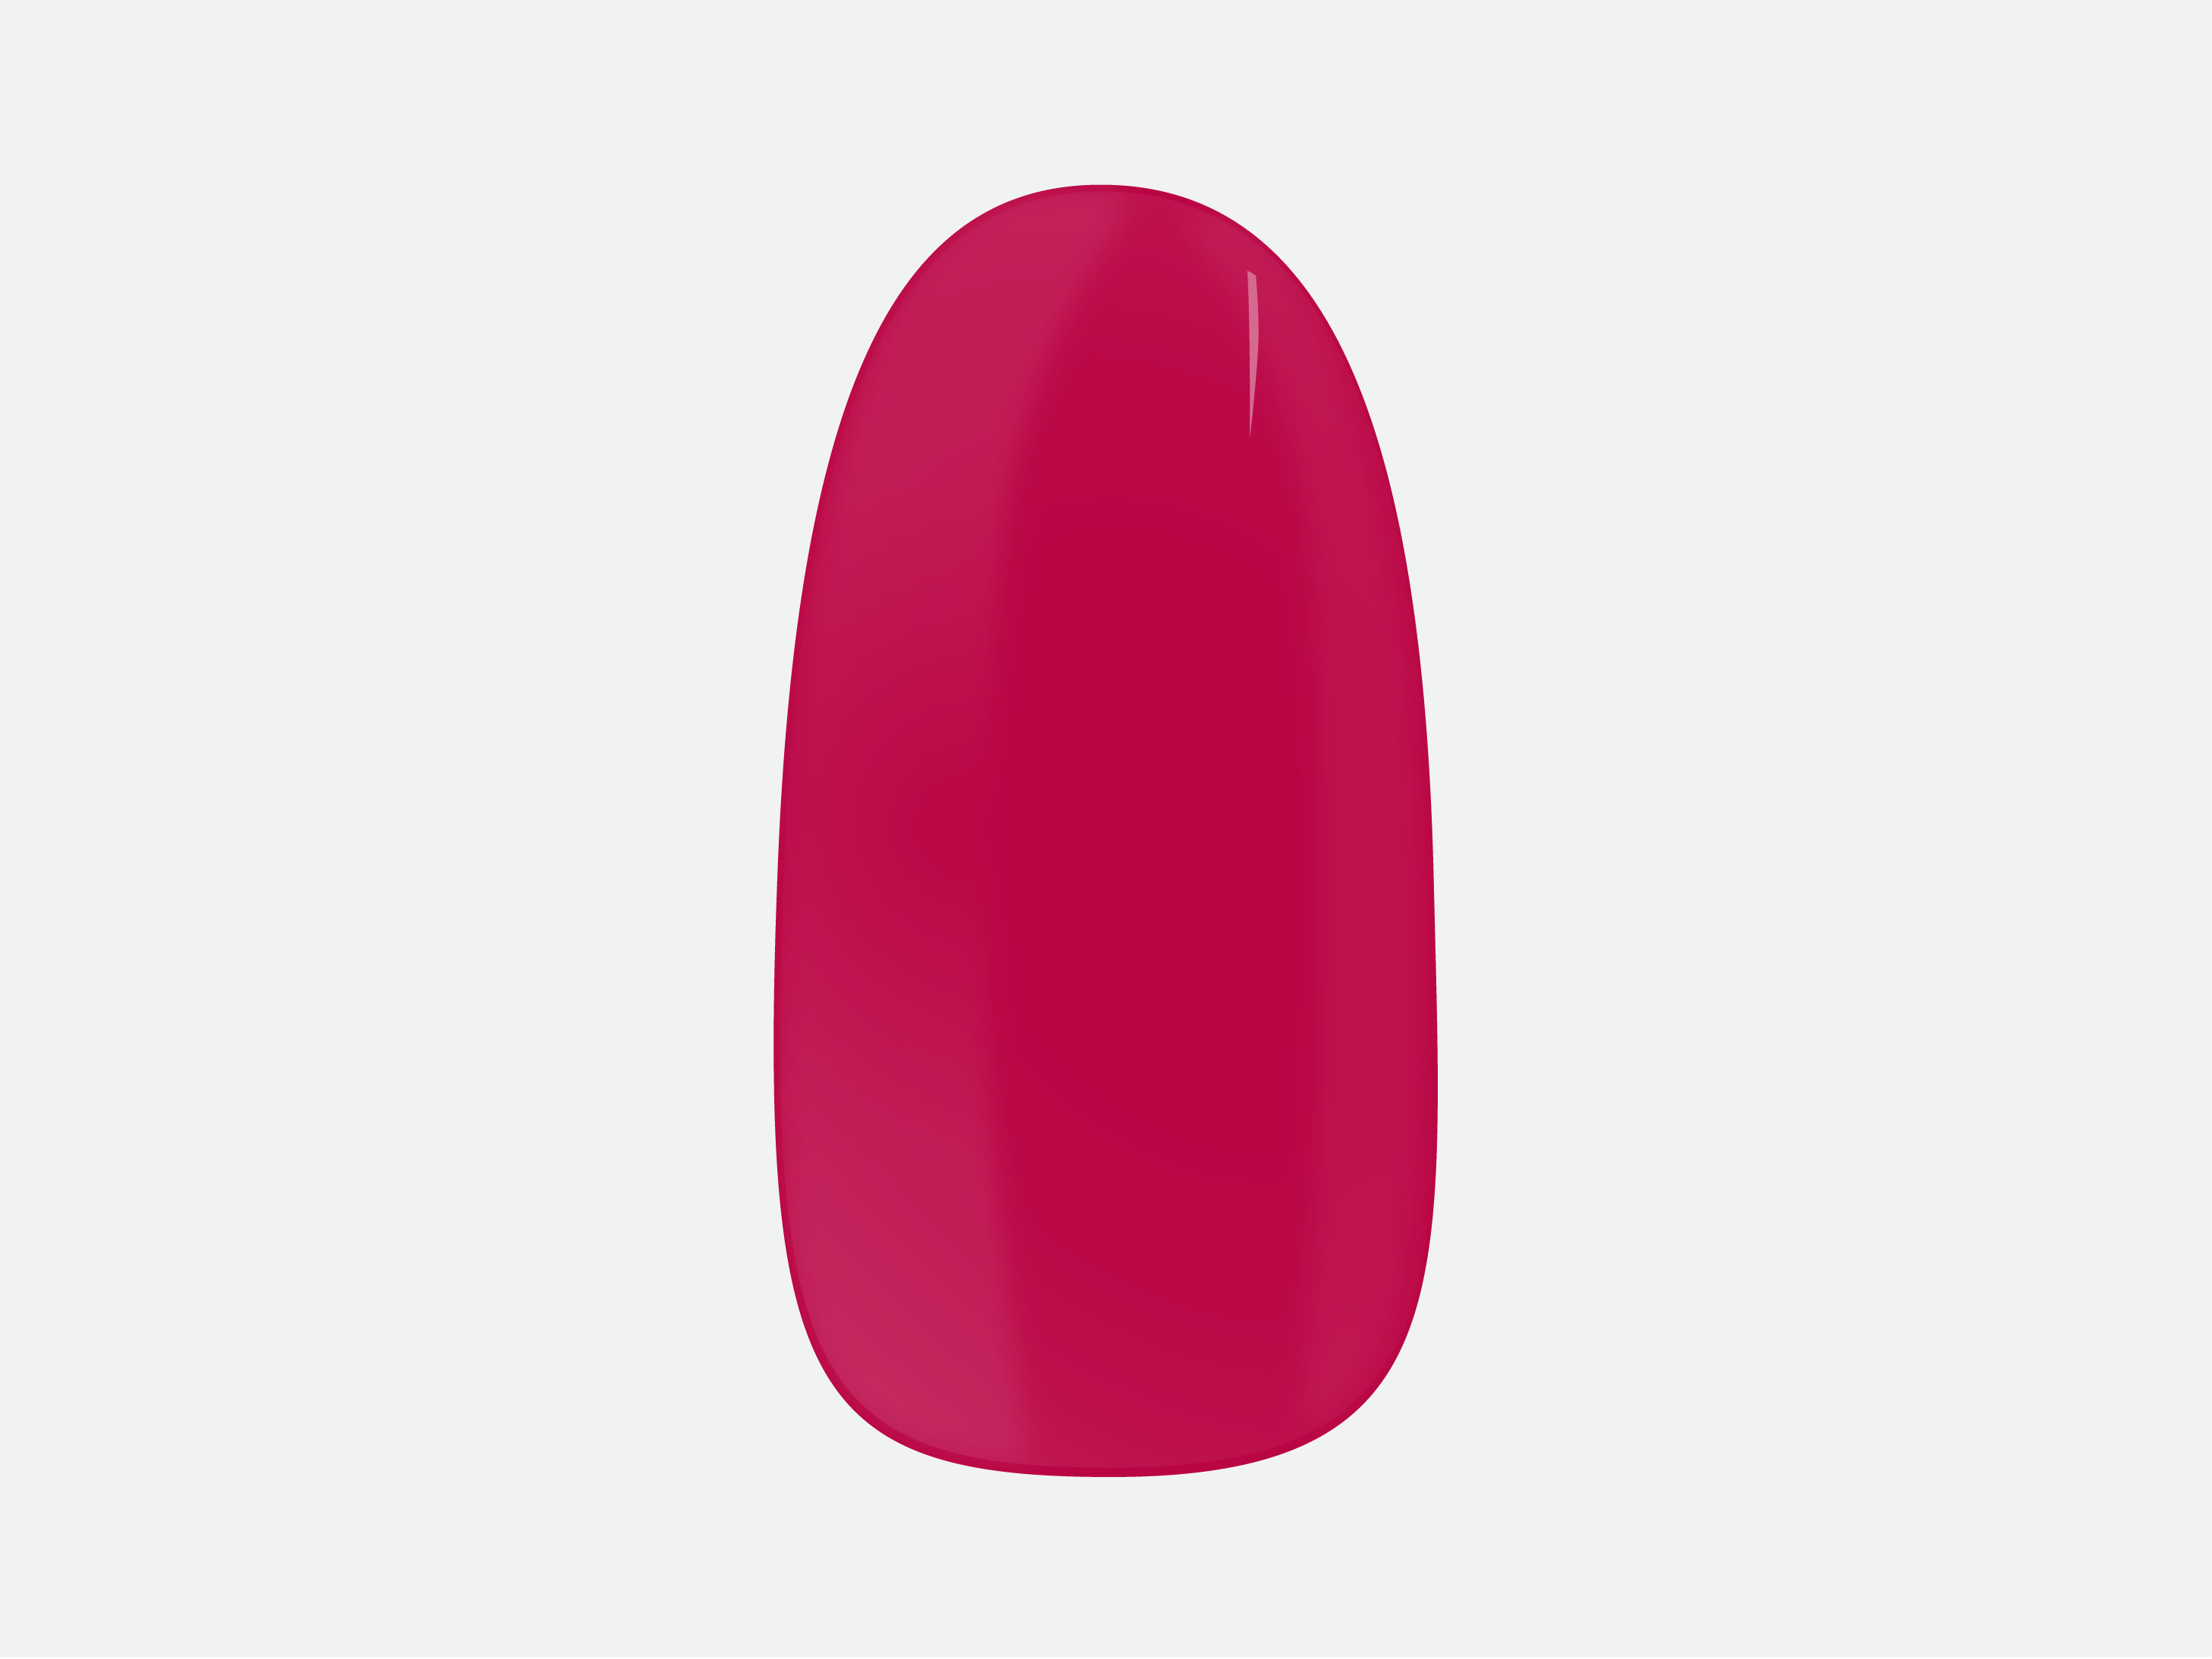 Rosy Red maniac Nails Gellak Sticker Manicure product image 